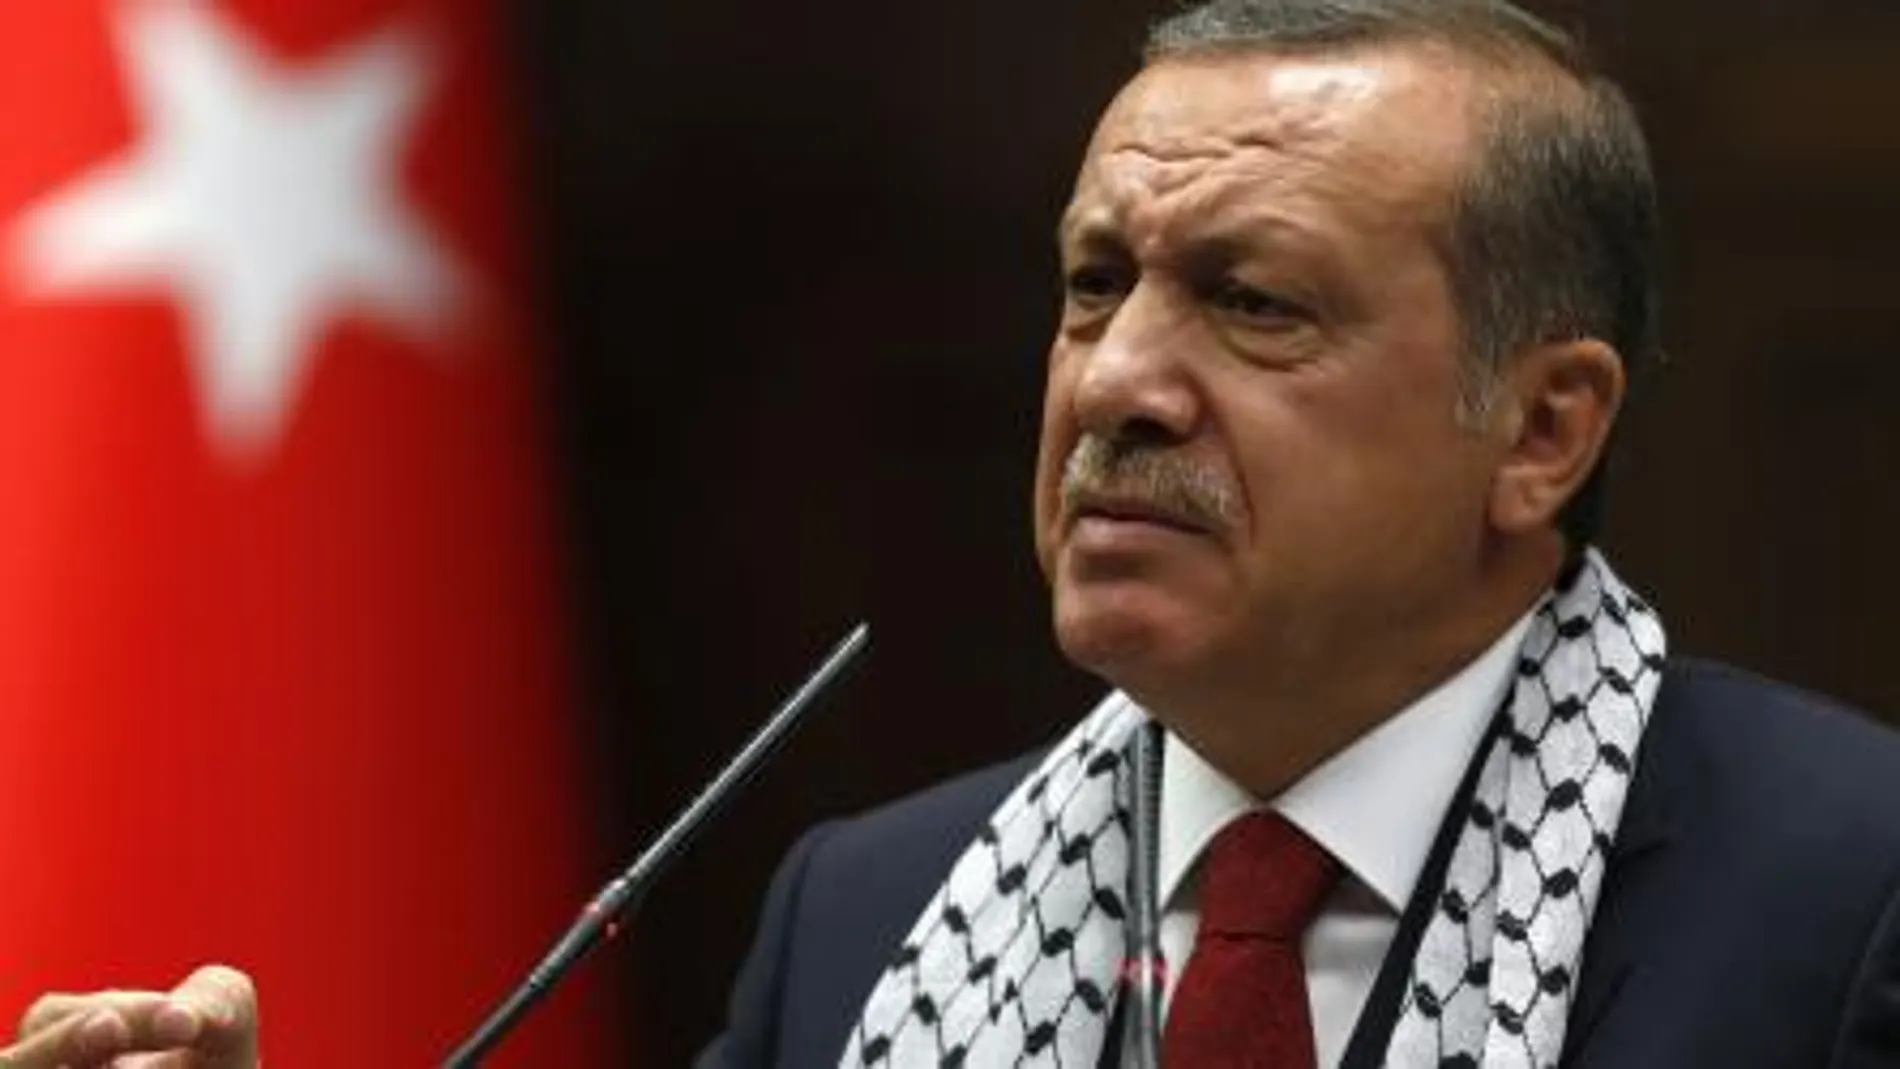 El islamista Recep Tayyip Erdogan